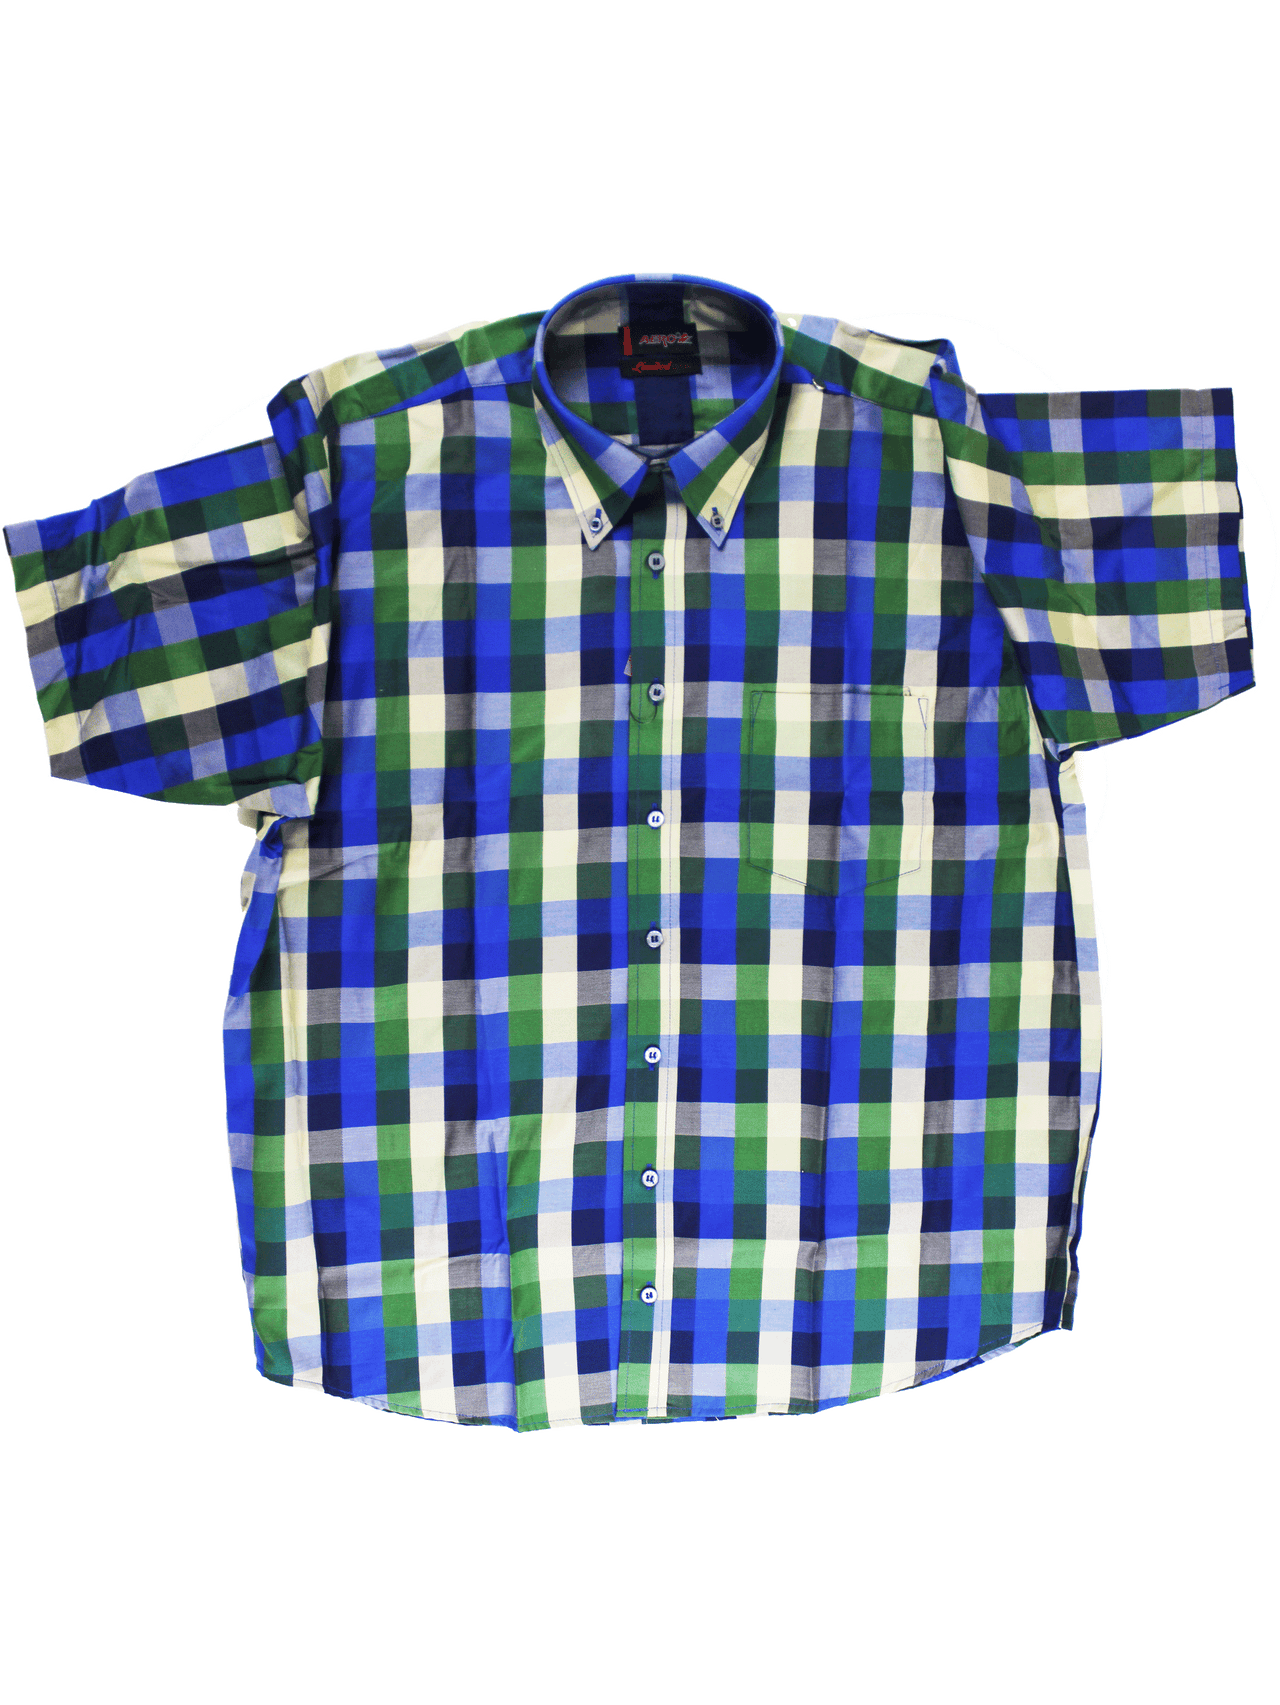 AERO Green/Beige/Blue Checkered S/S Shirt